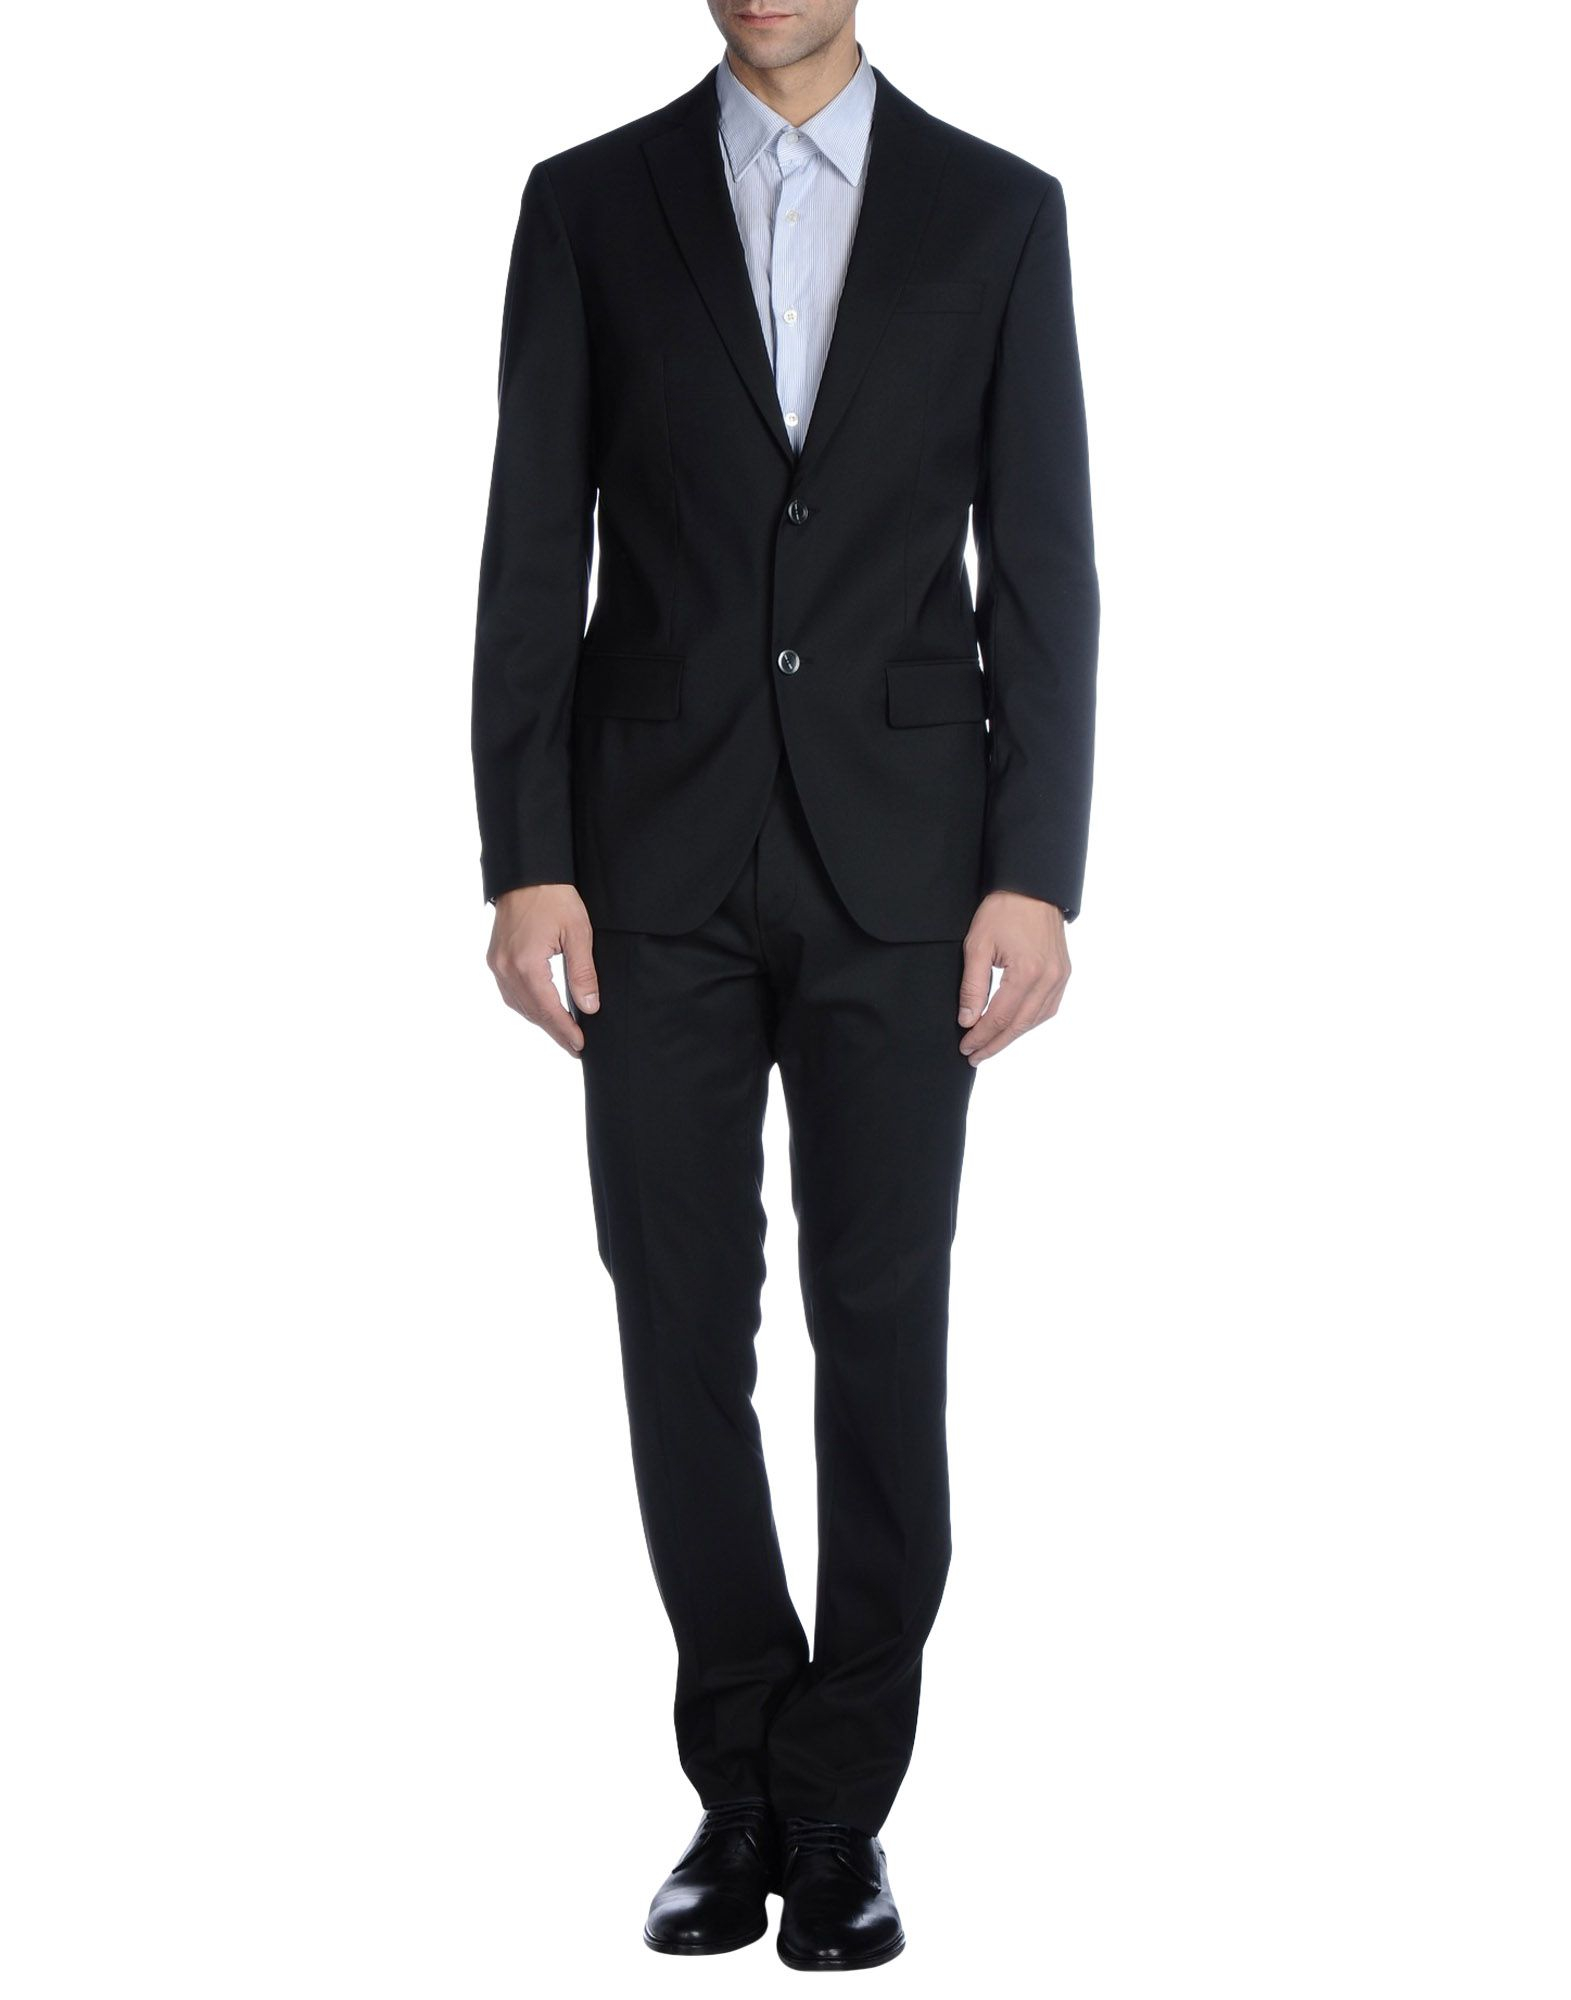 Lyst - Class Roberto Cavalli Suit in Black for Men